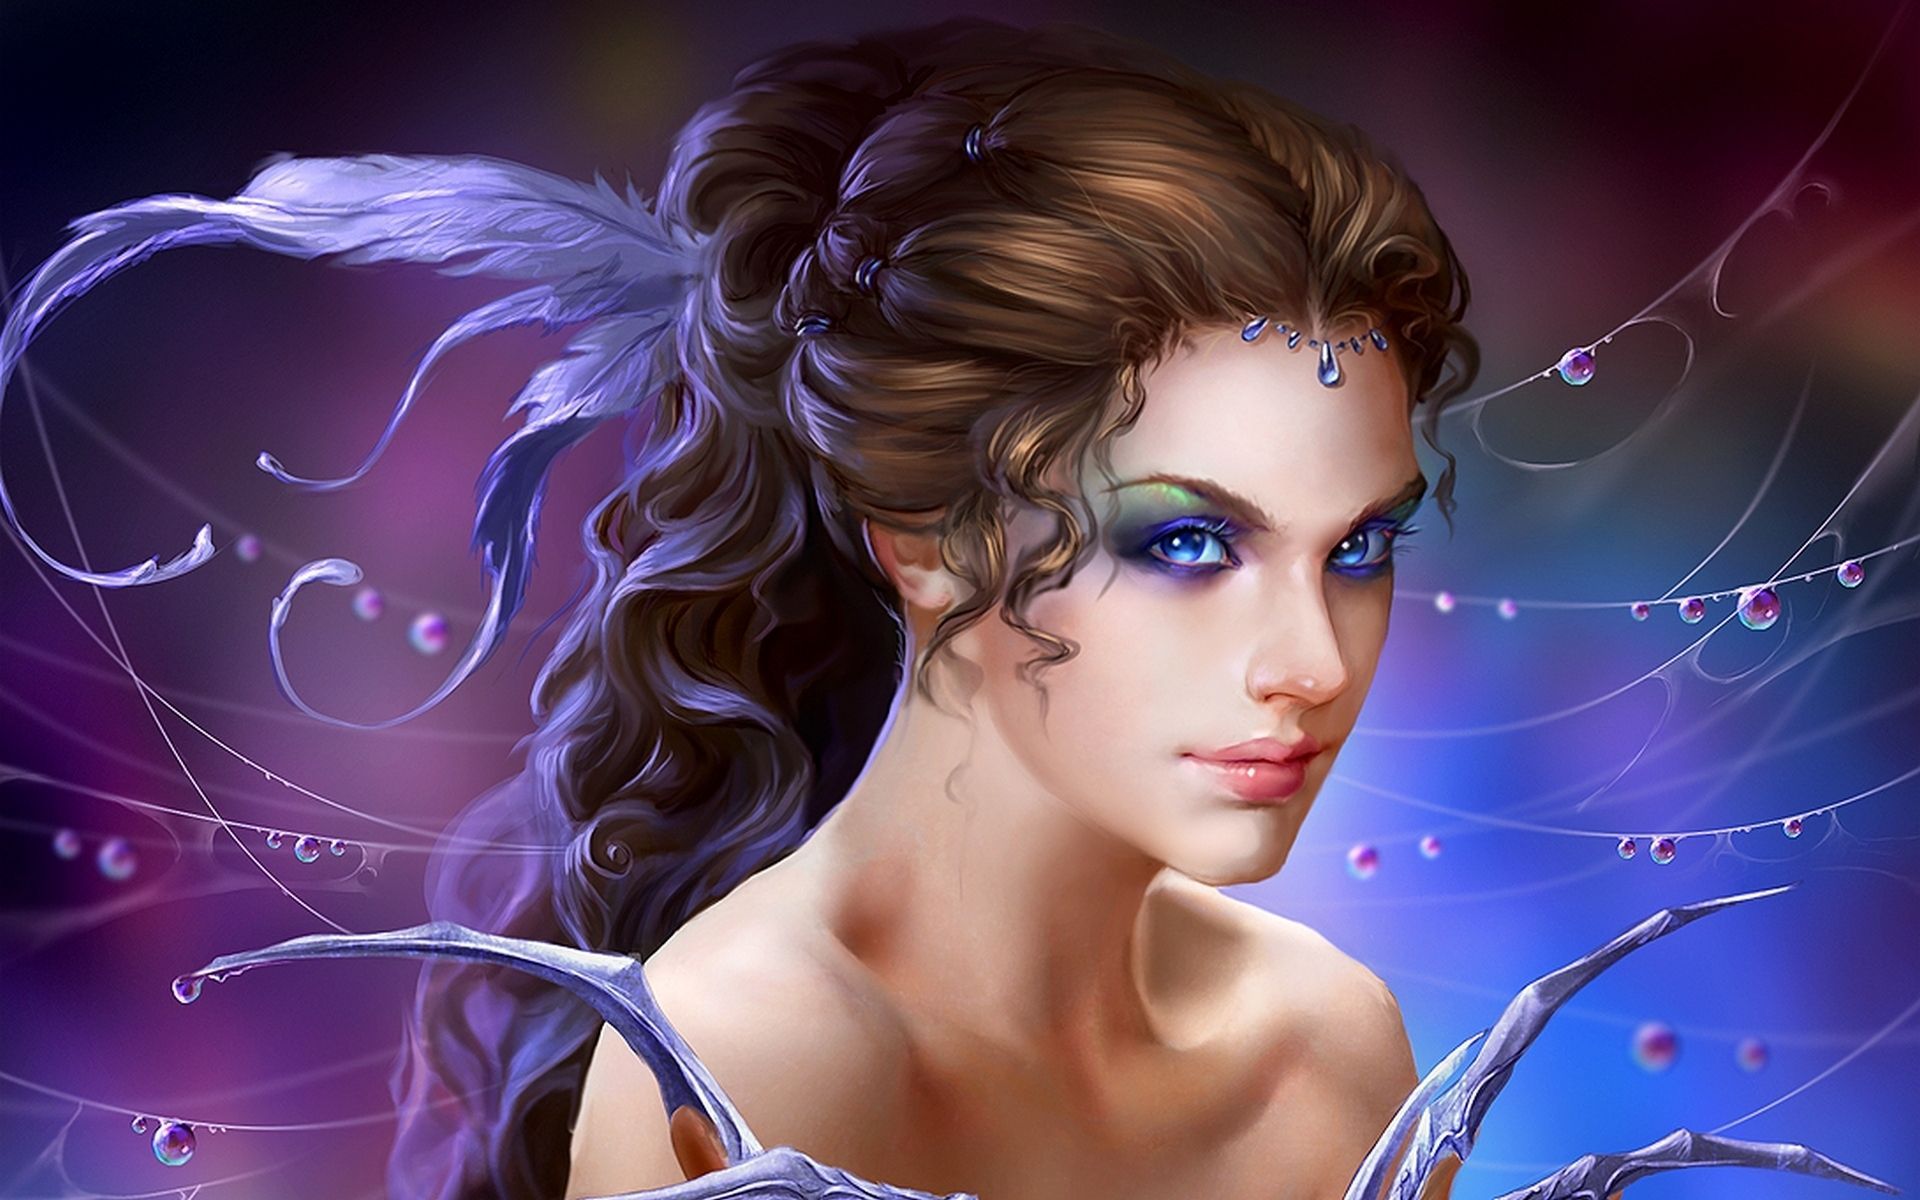 Download Cute Girl Fantasy Wallpaper Full HD Backgrounds